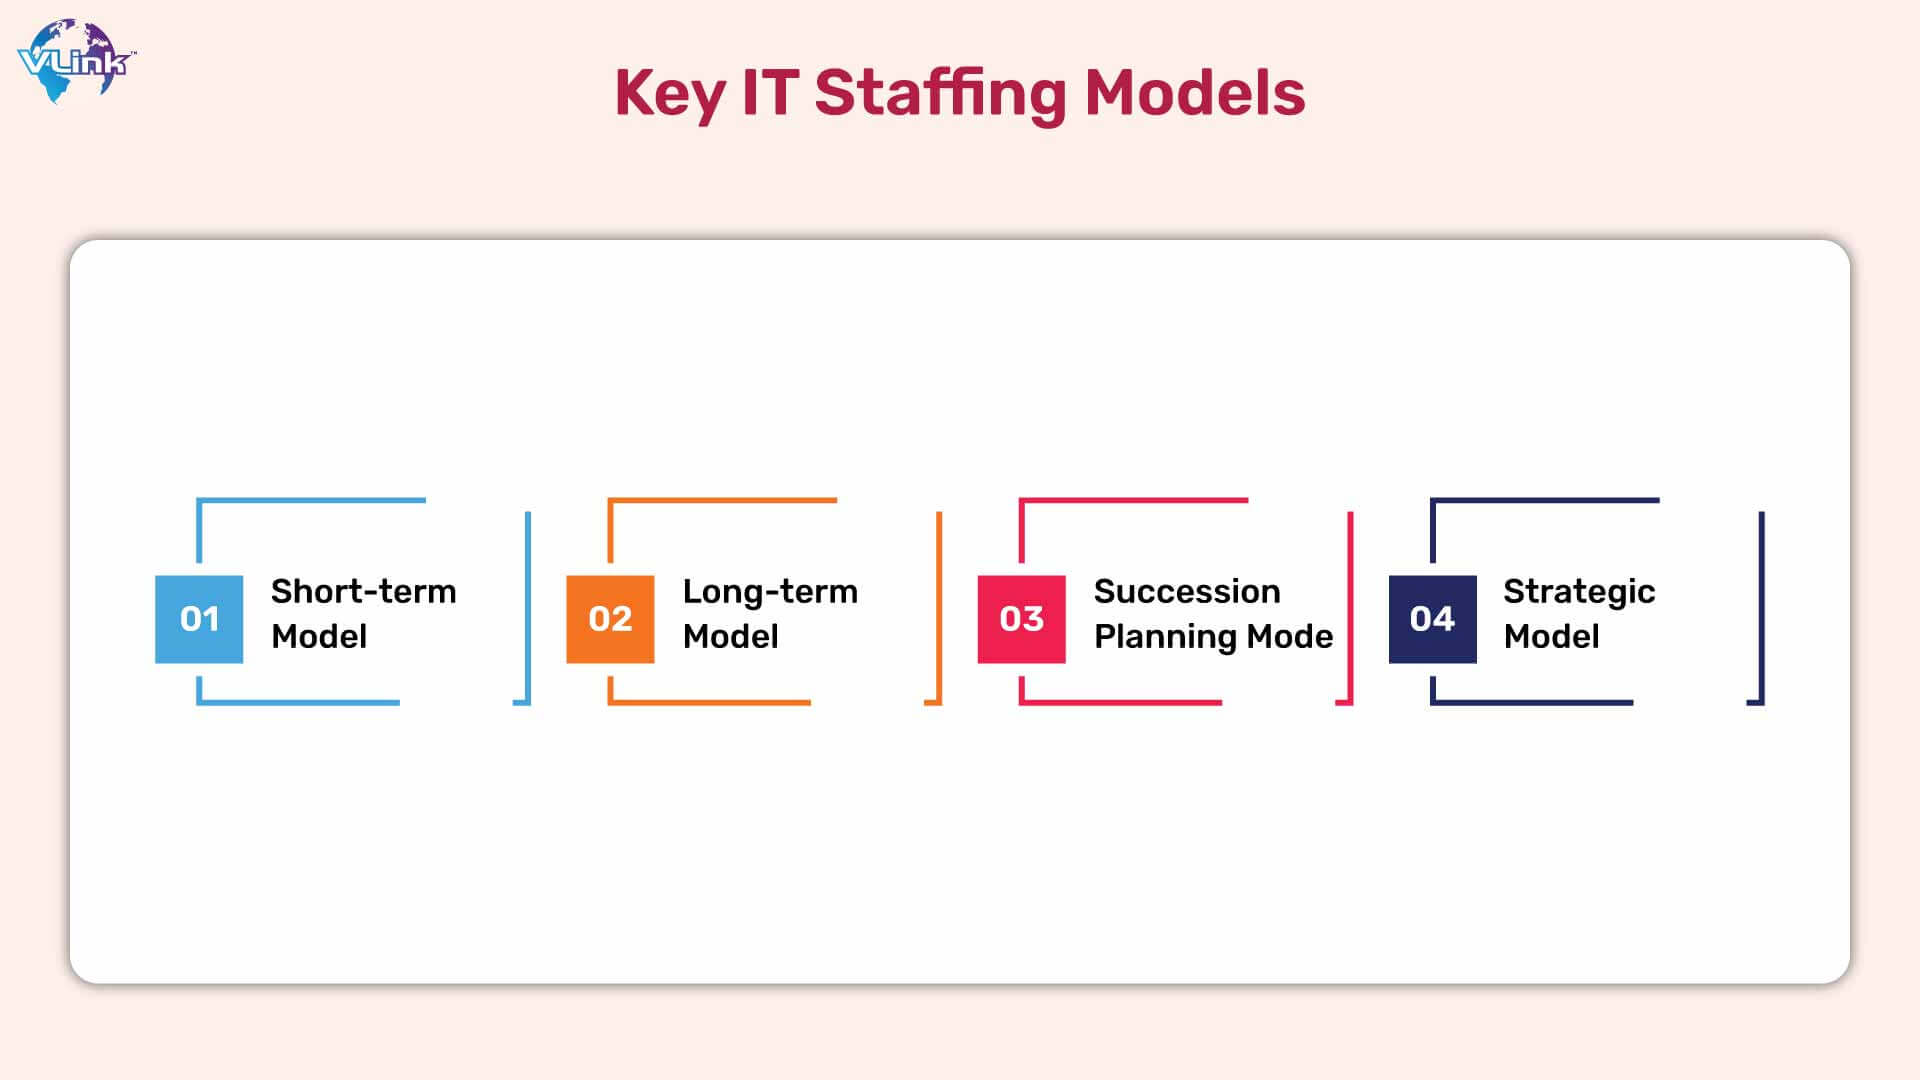 The key IT Staffing Models